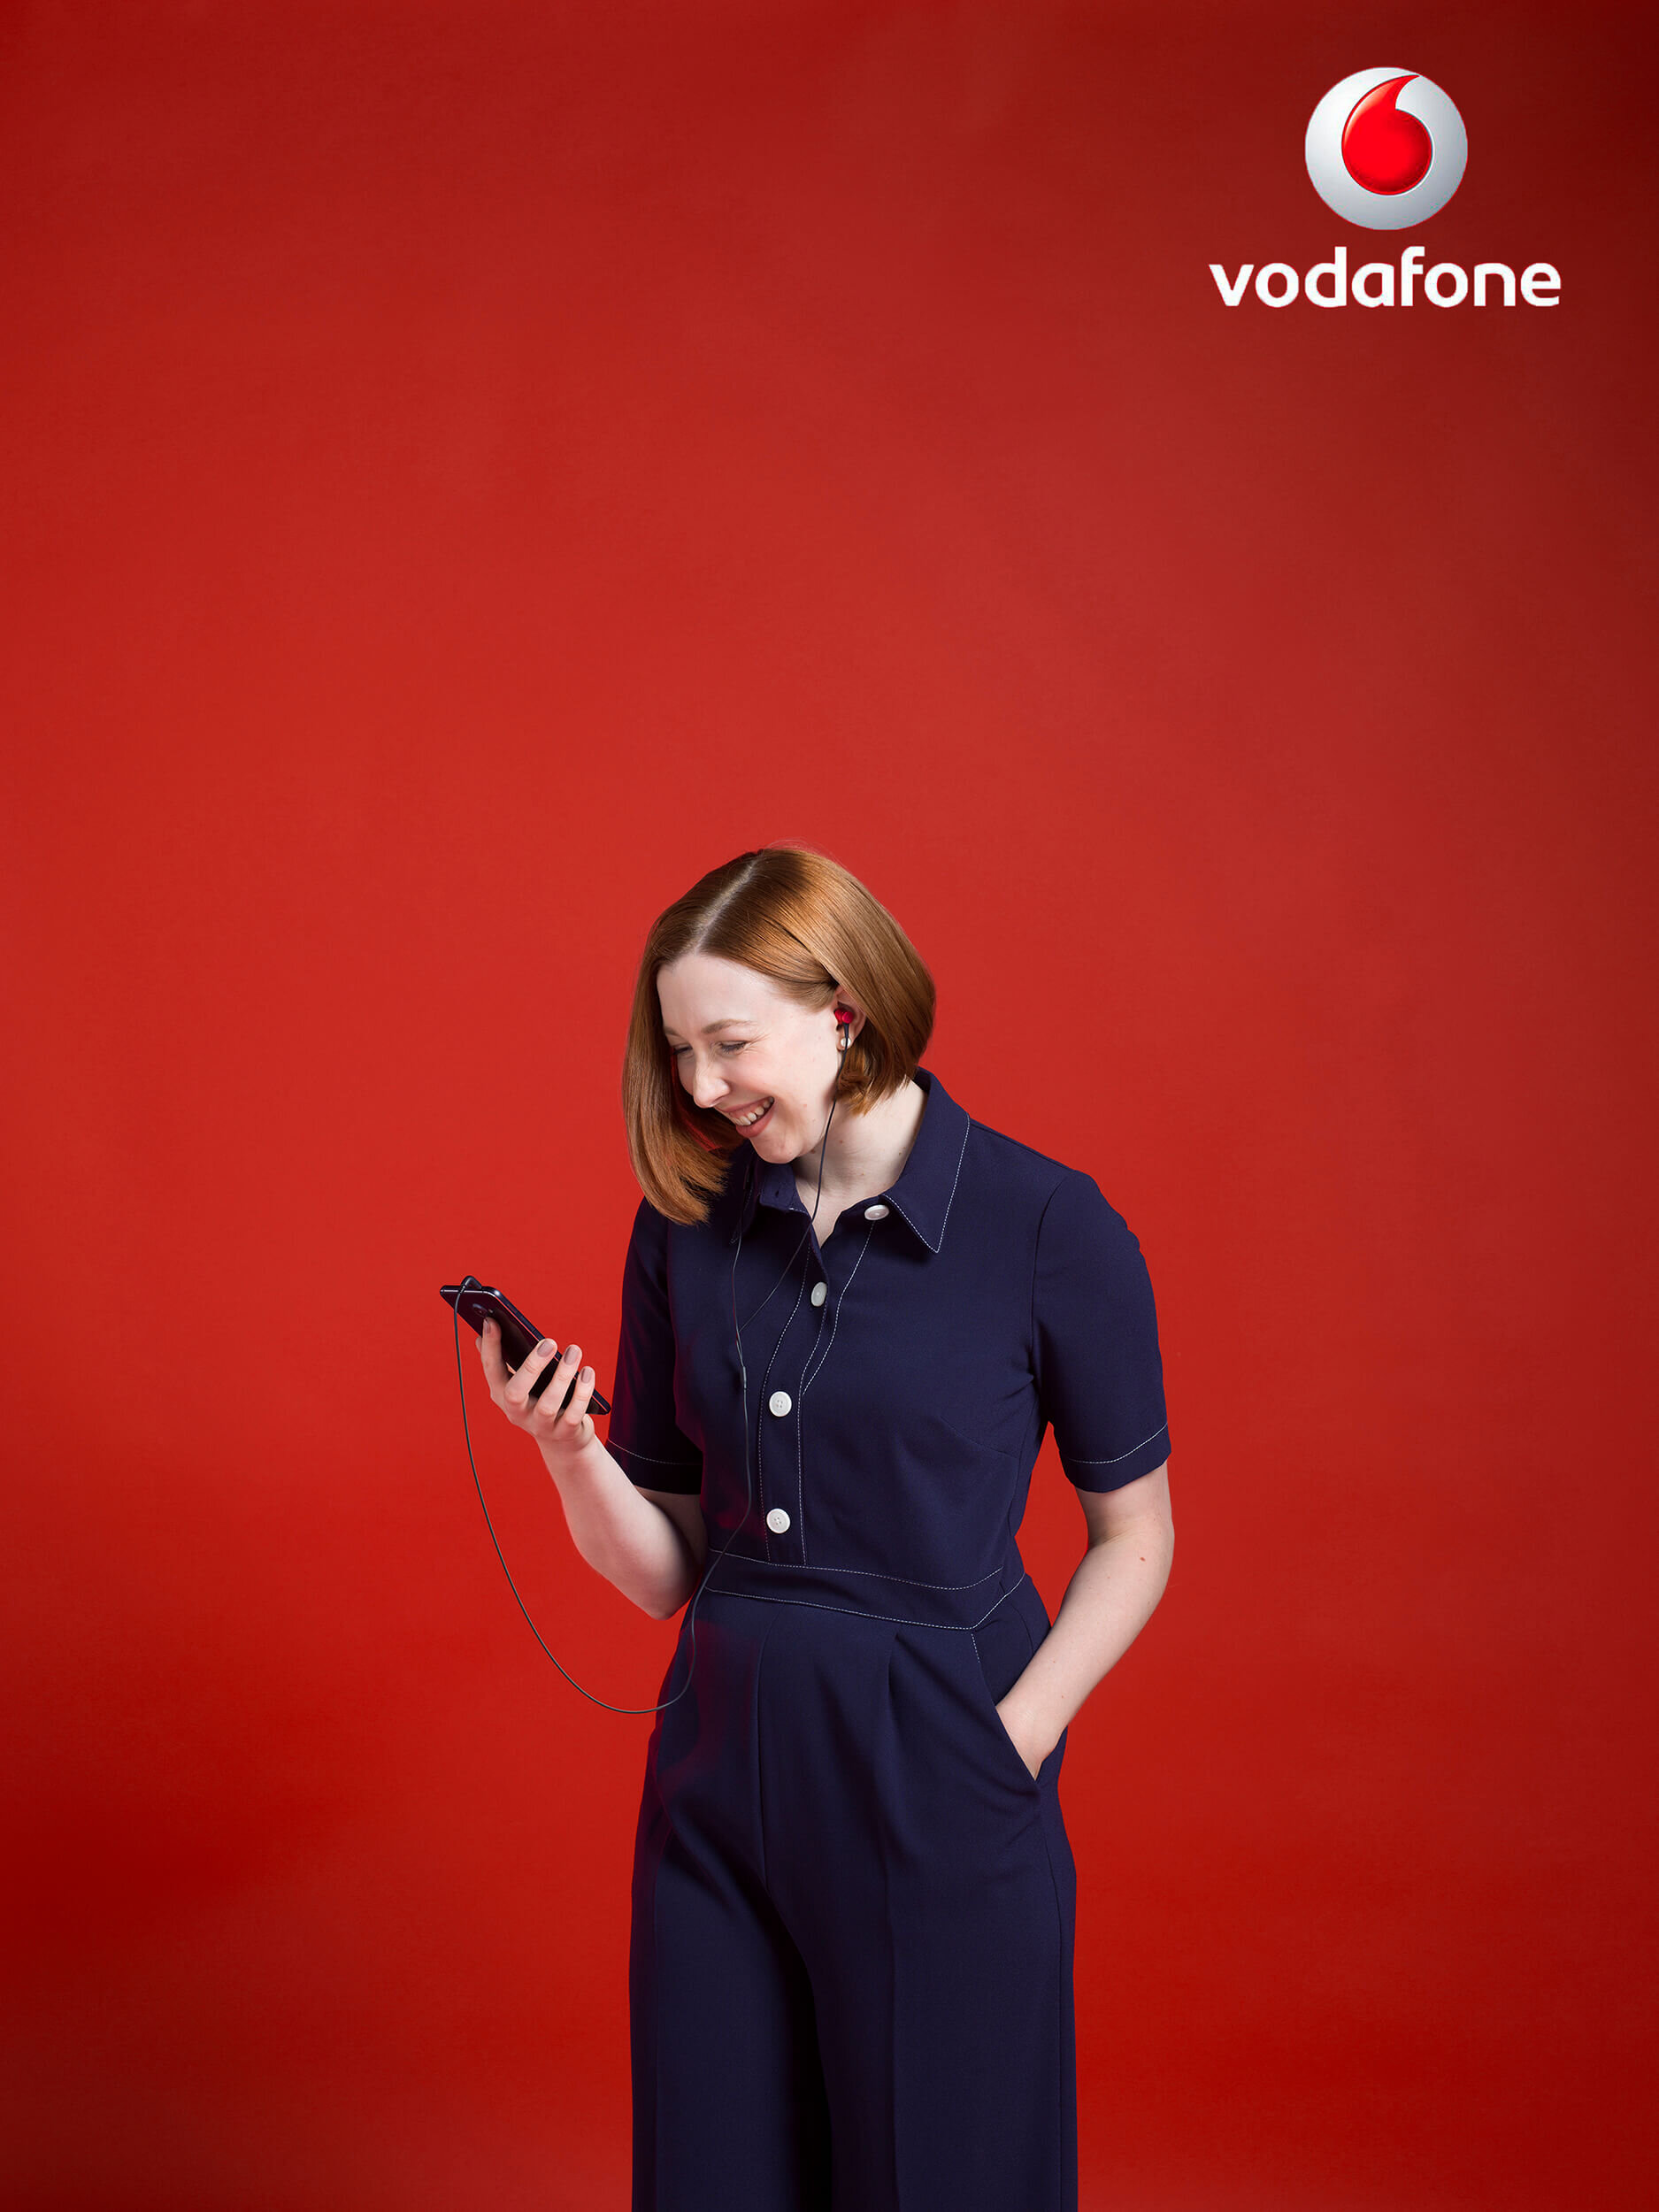 Vodafone_1519_v02 copy.jpg